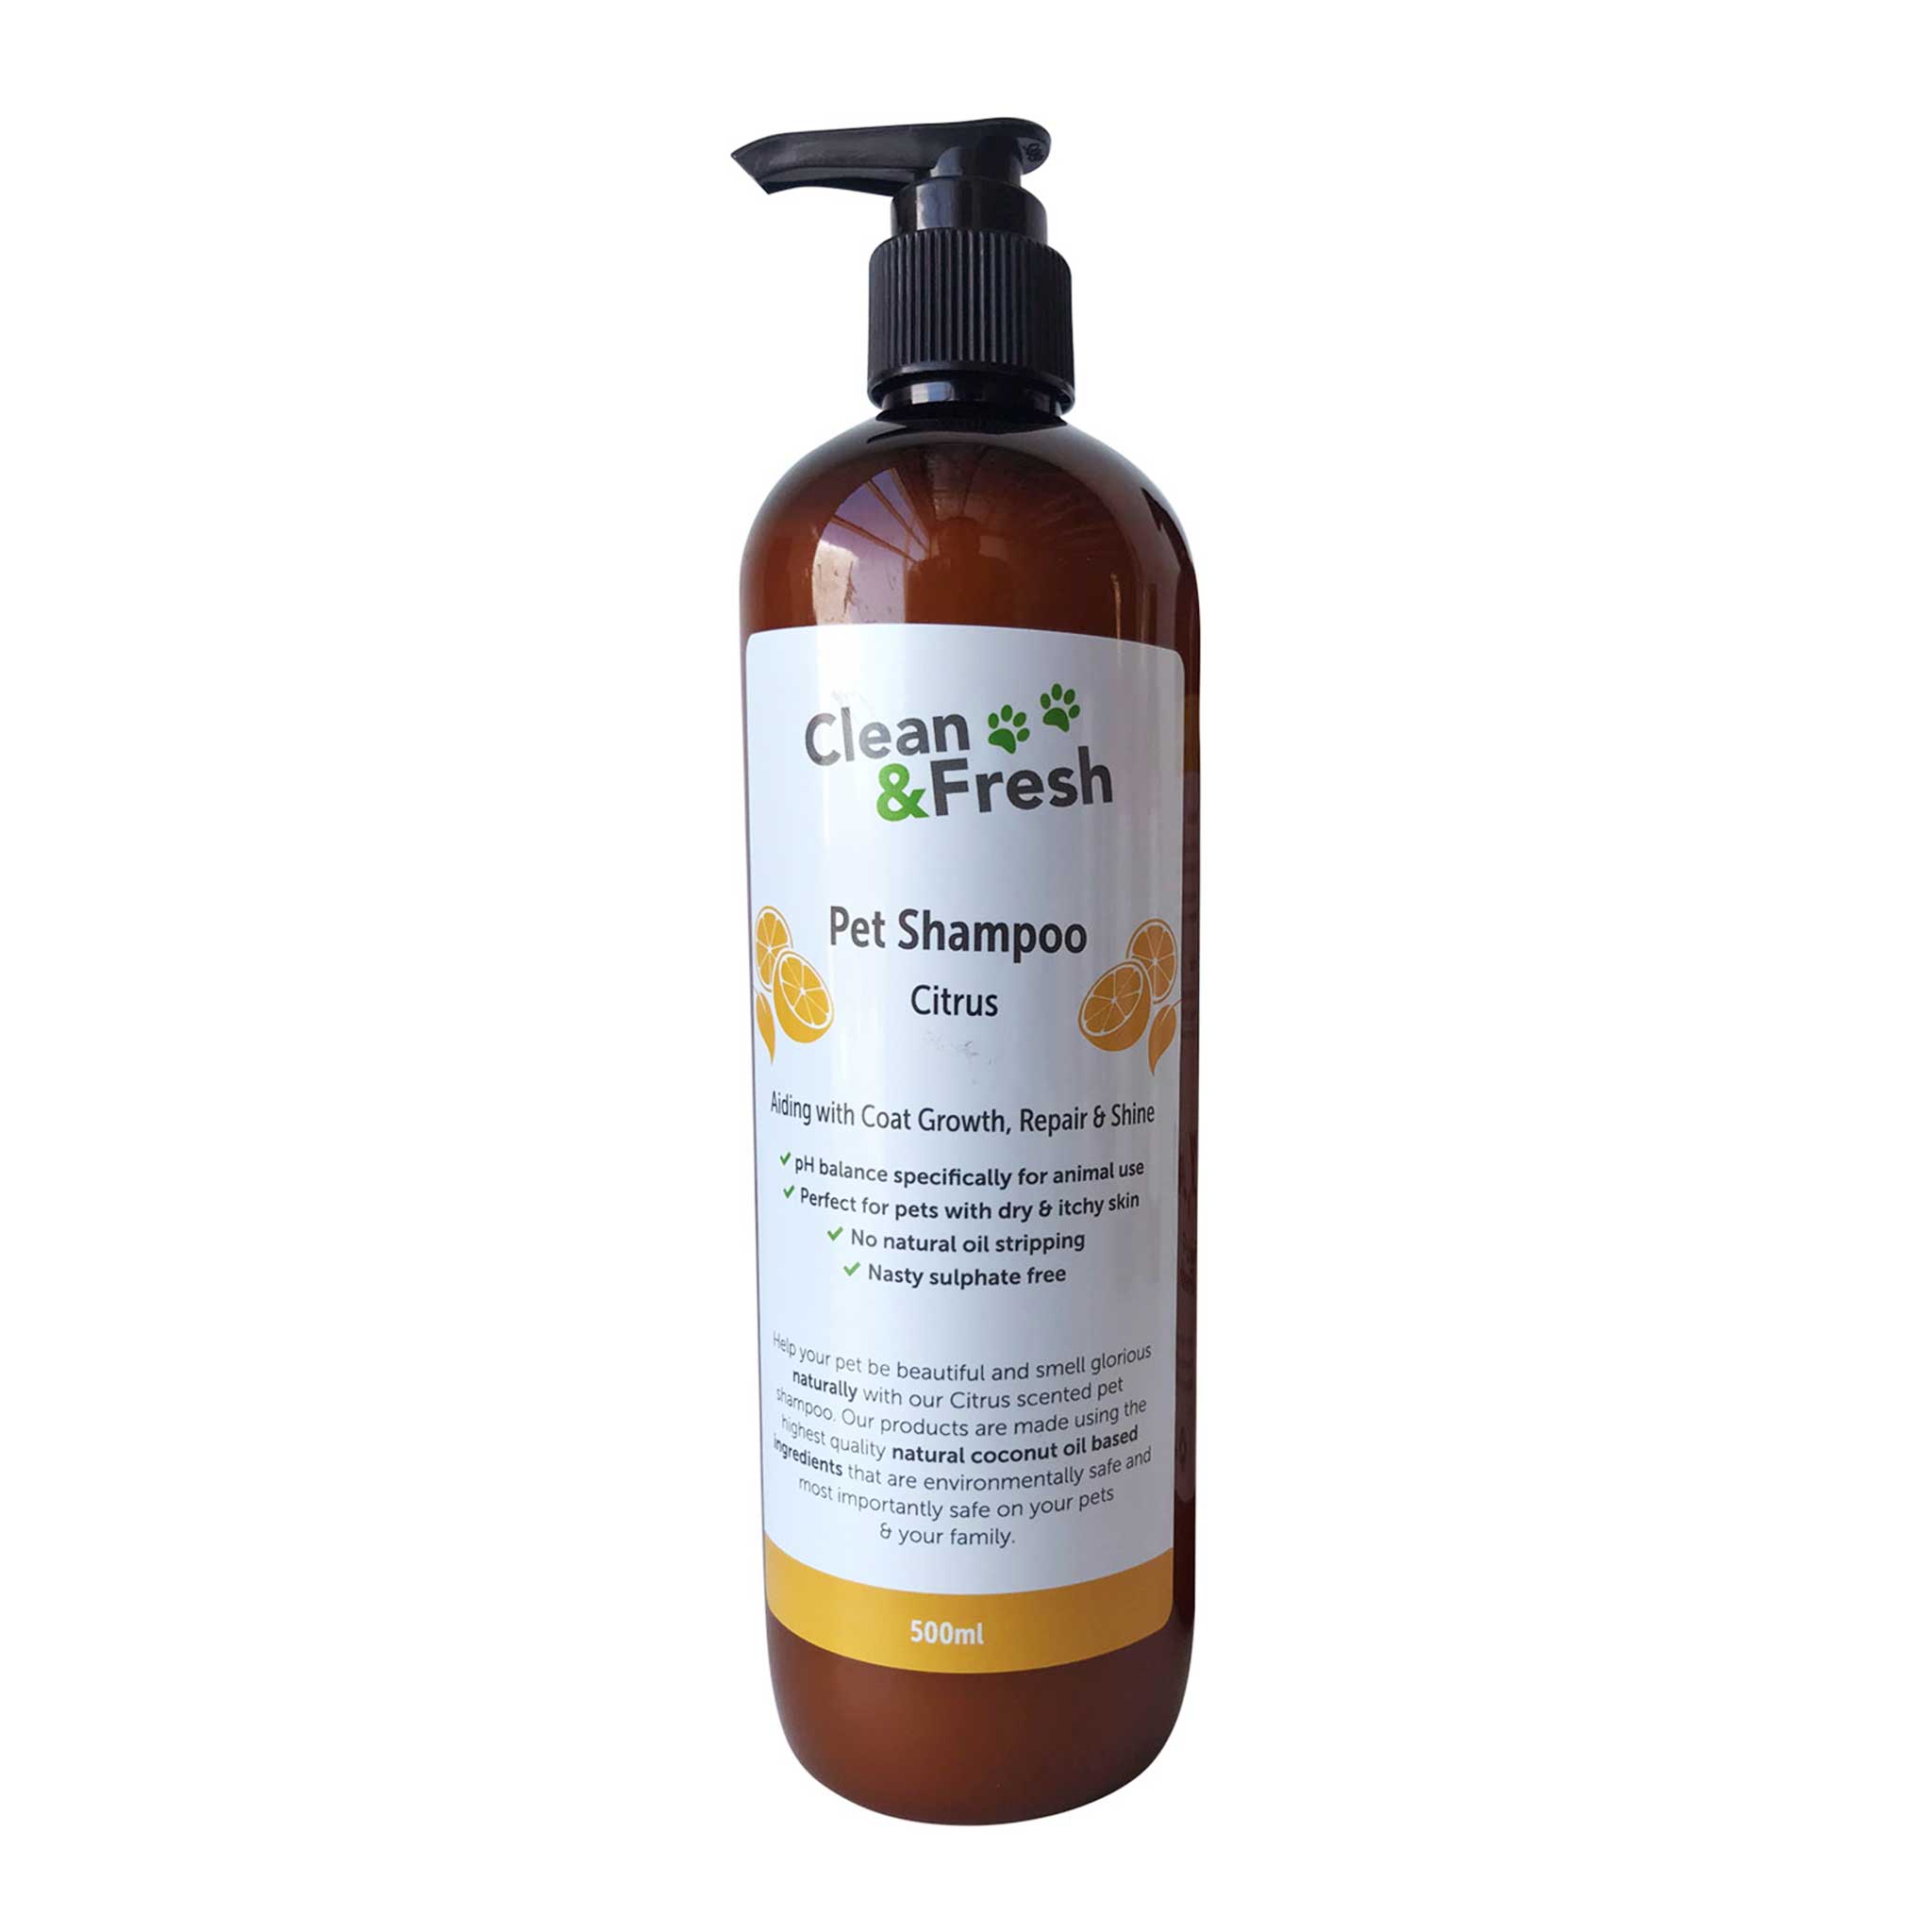 Citrus Pet Shampoo from Clean & Fresh